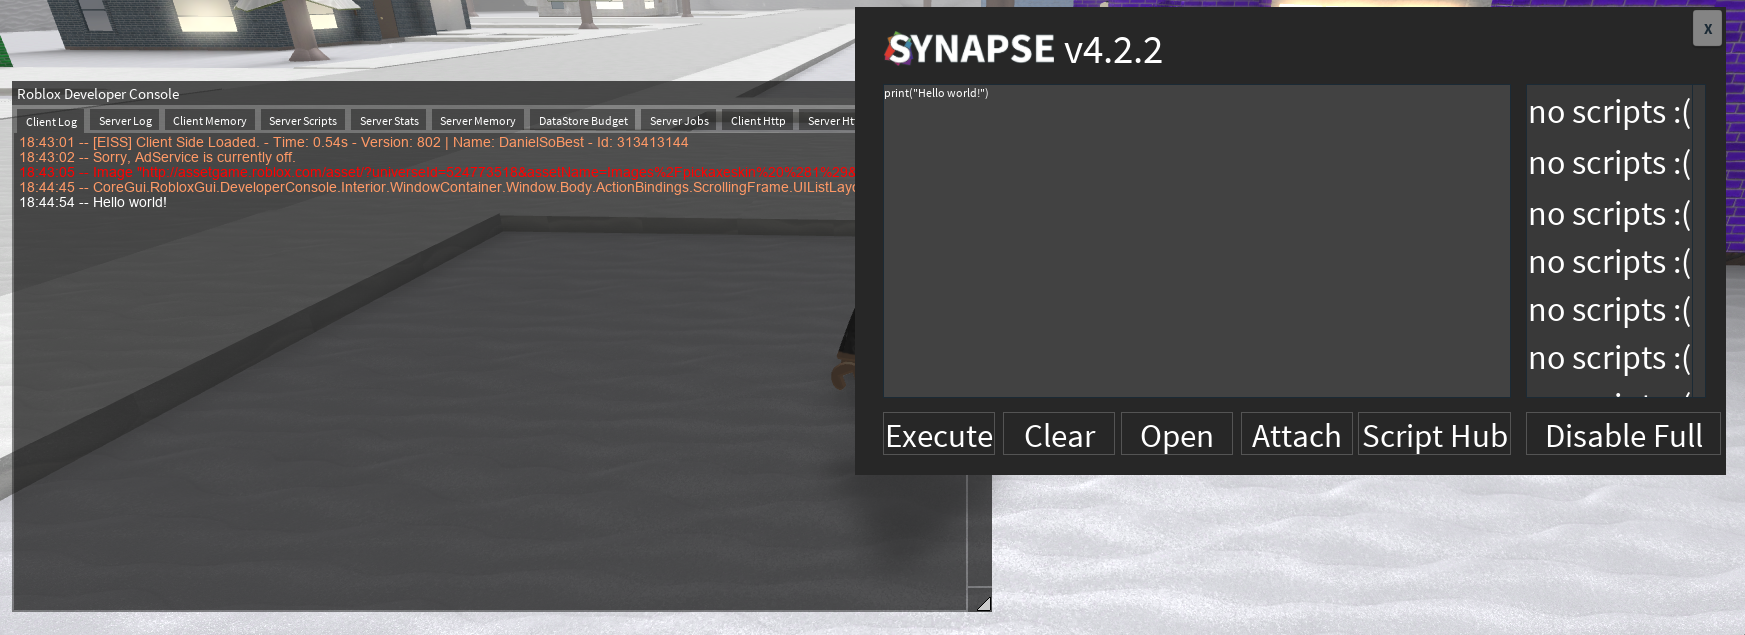 Roblox Synapse Windows 7